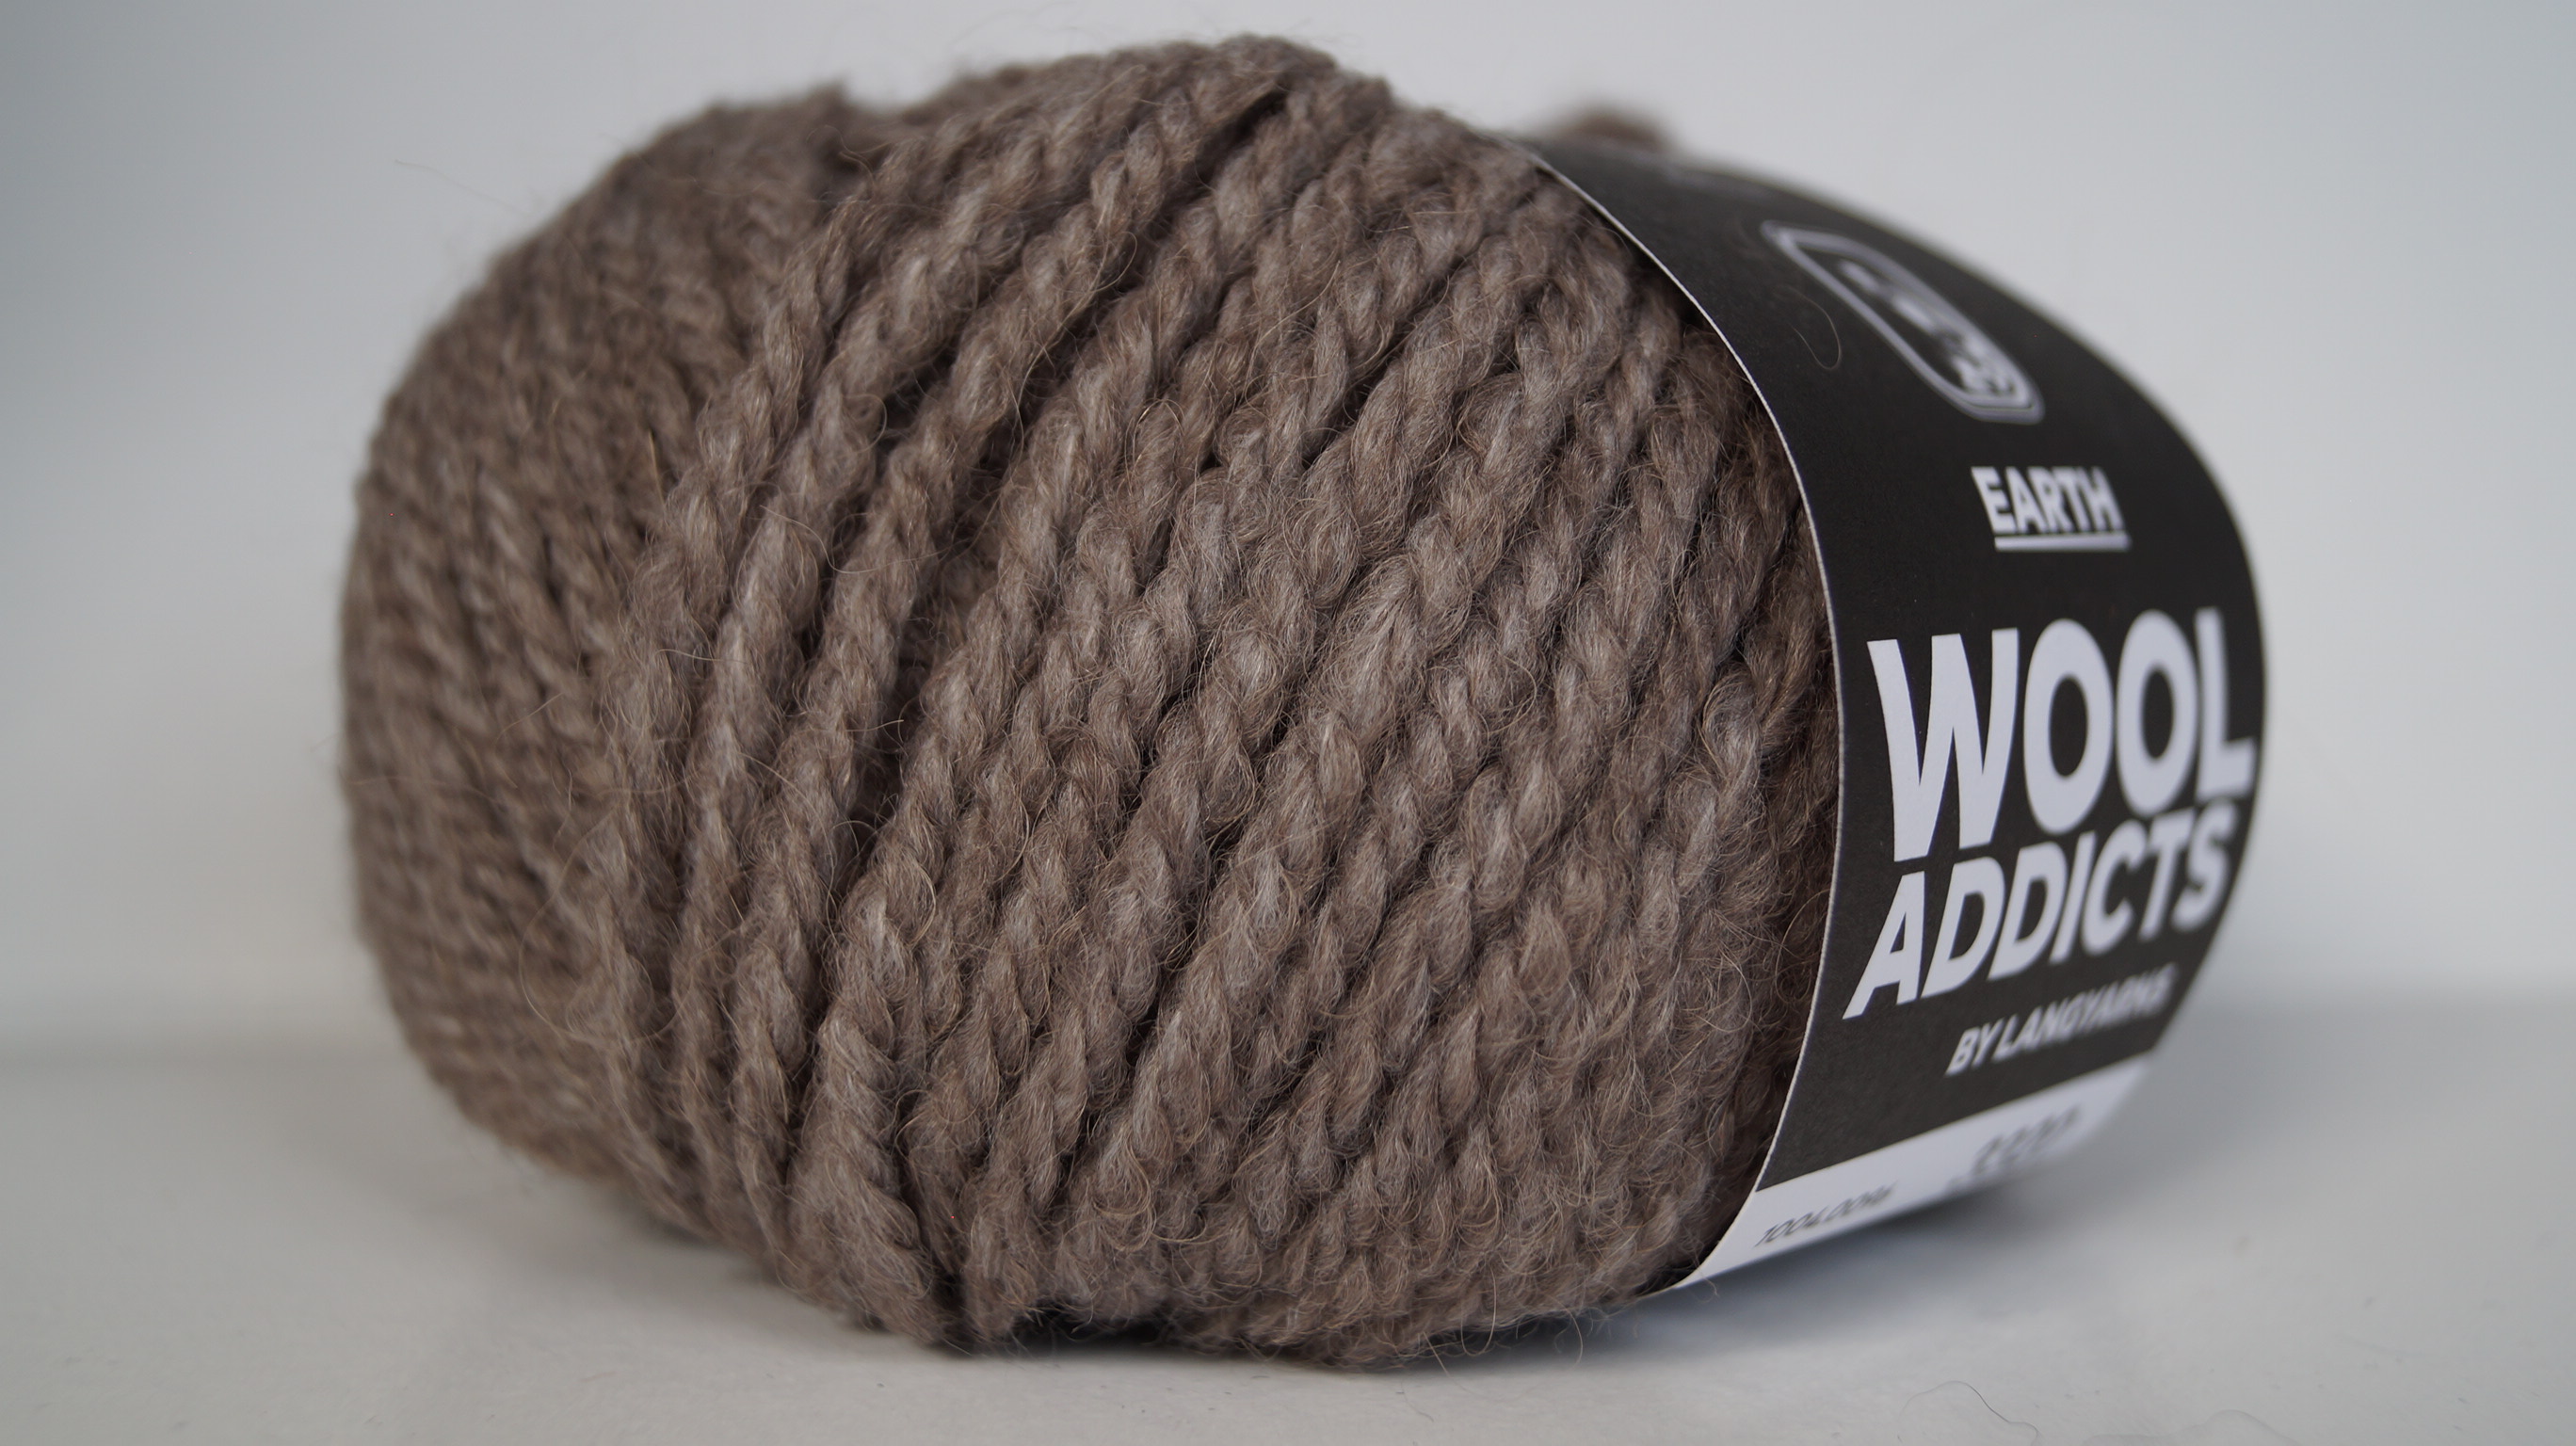 Lang Yarns Earth wool addict